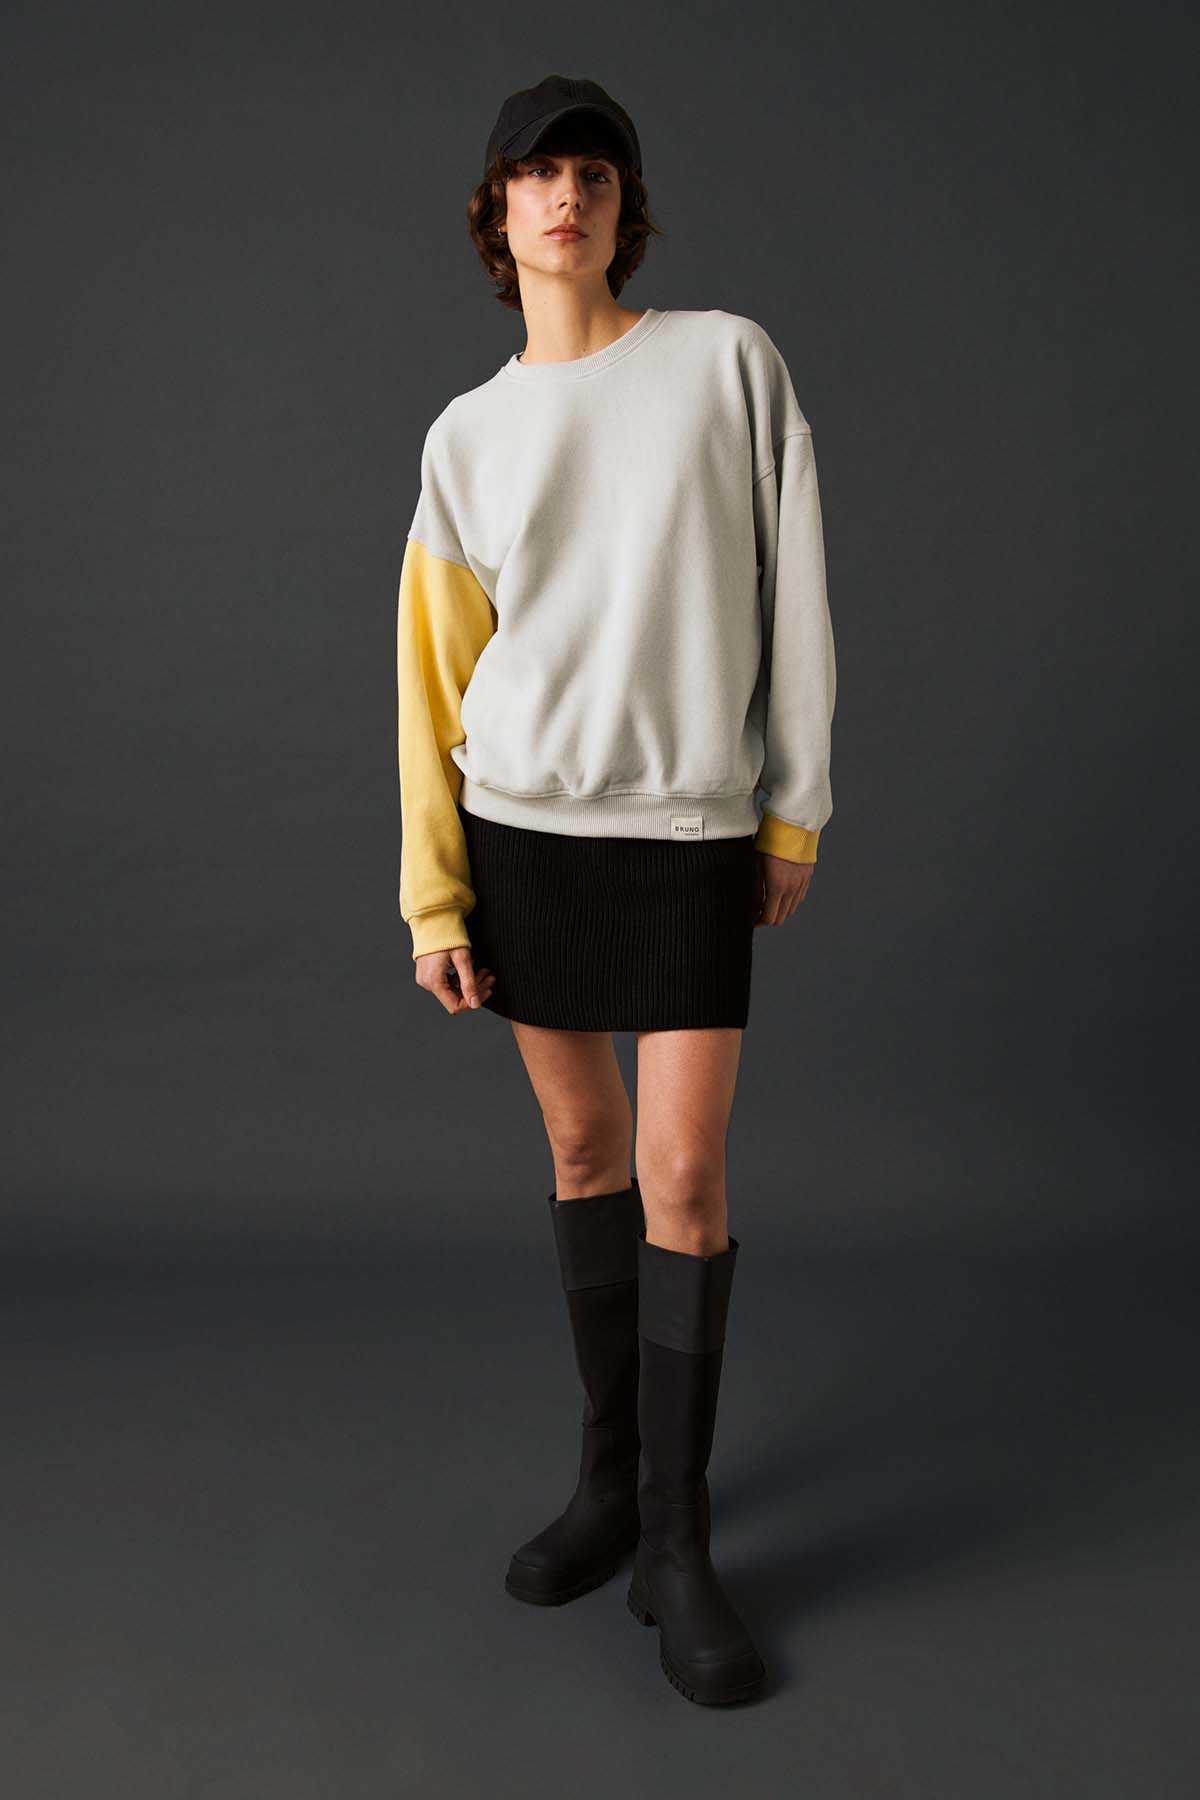 Matching Sweatshirt - Stone Grey/Pale Yellow